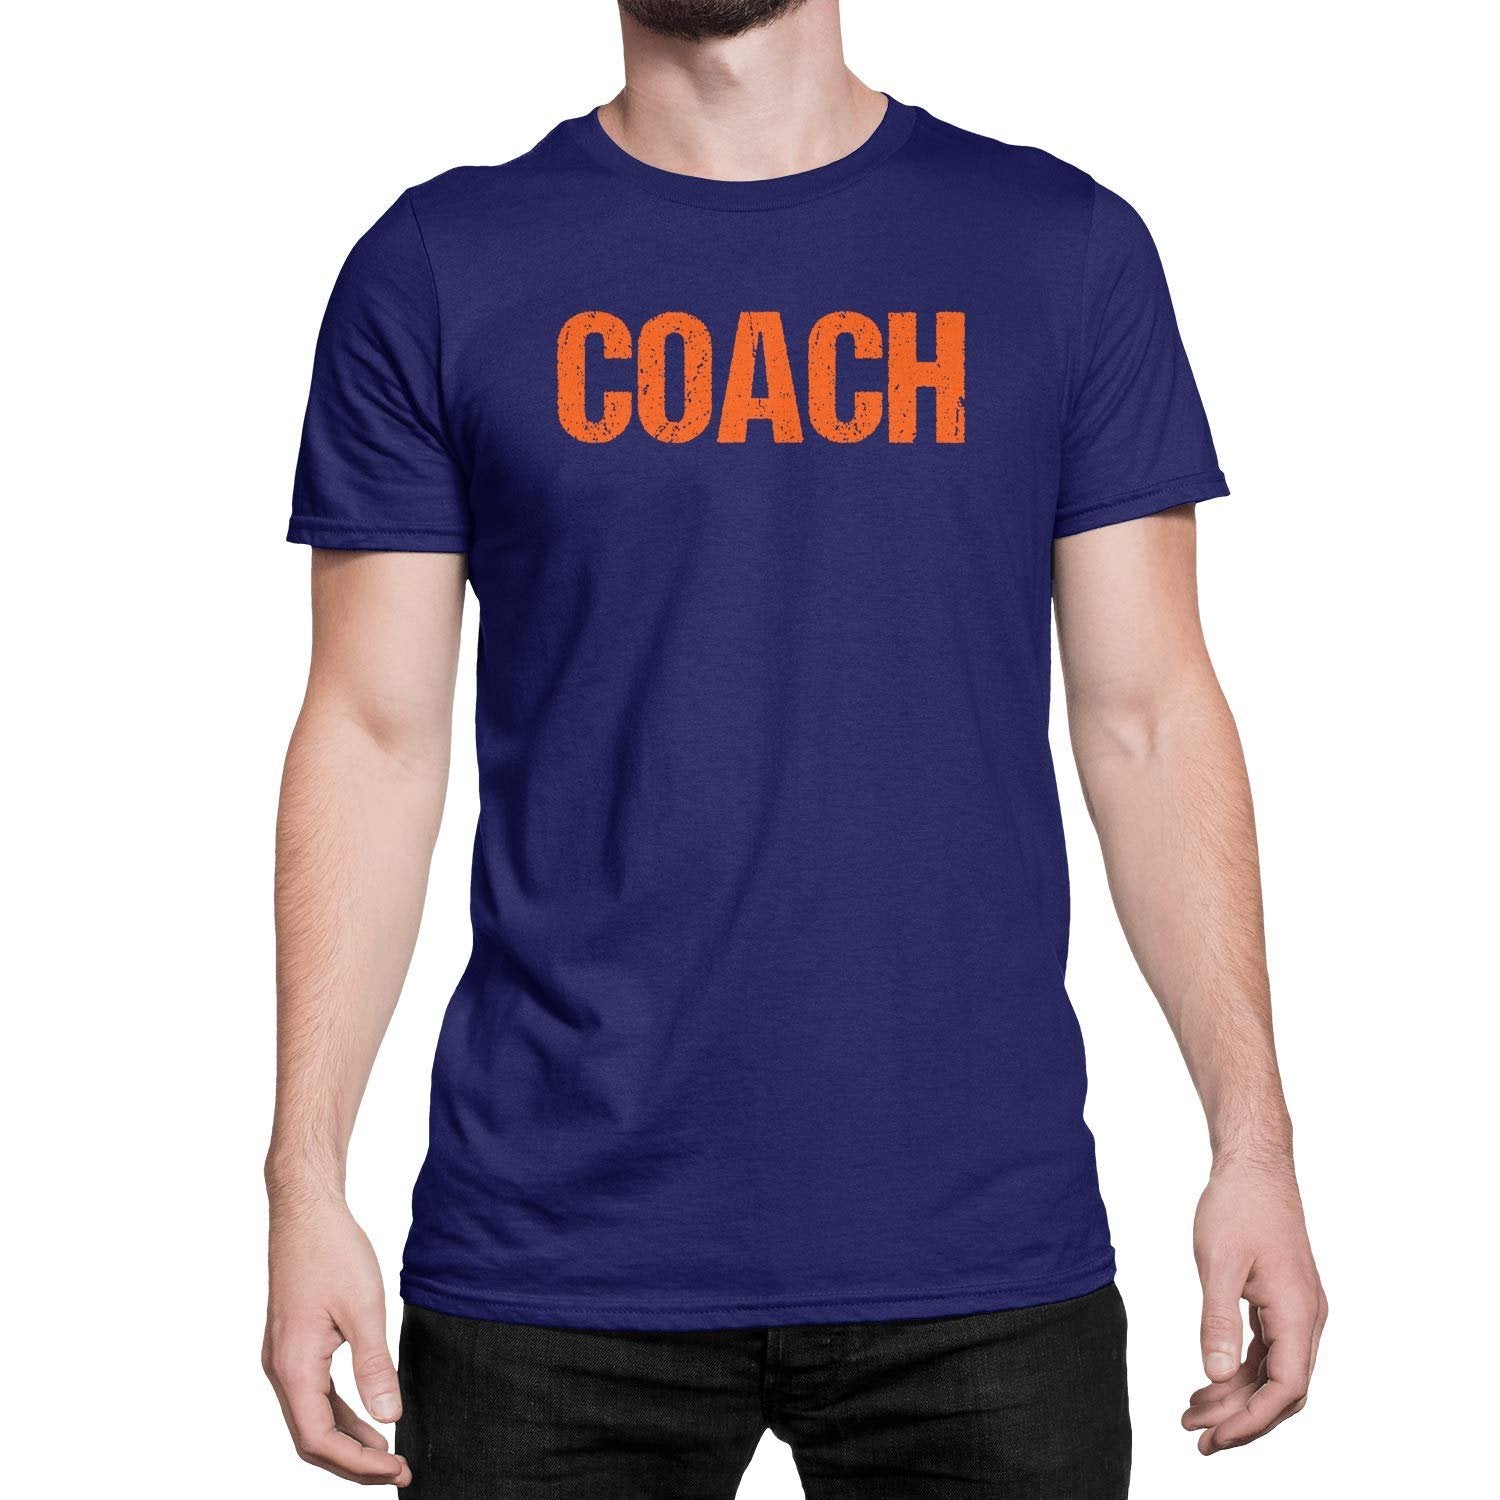 Coach T-Shirt Sports Coaching Tee Shirt (Navy & Orange, Distressed)